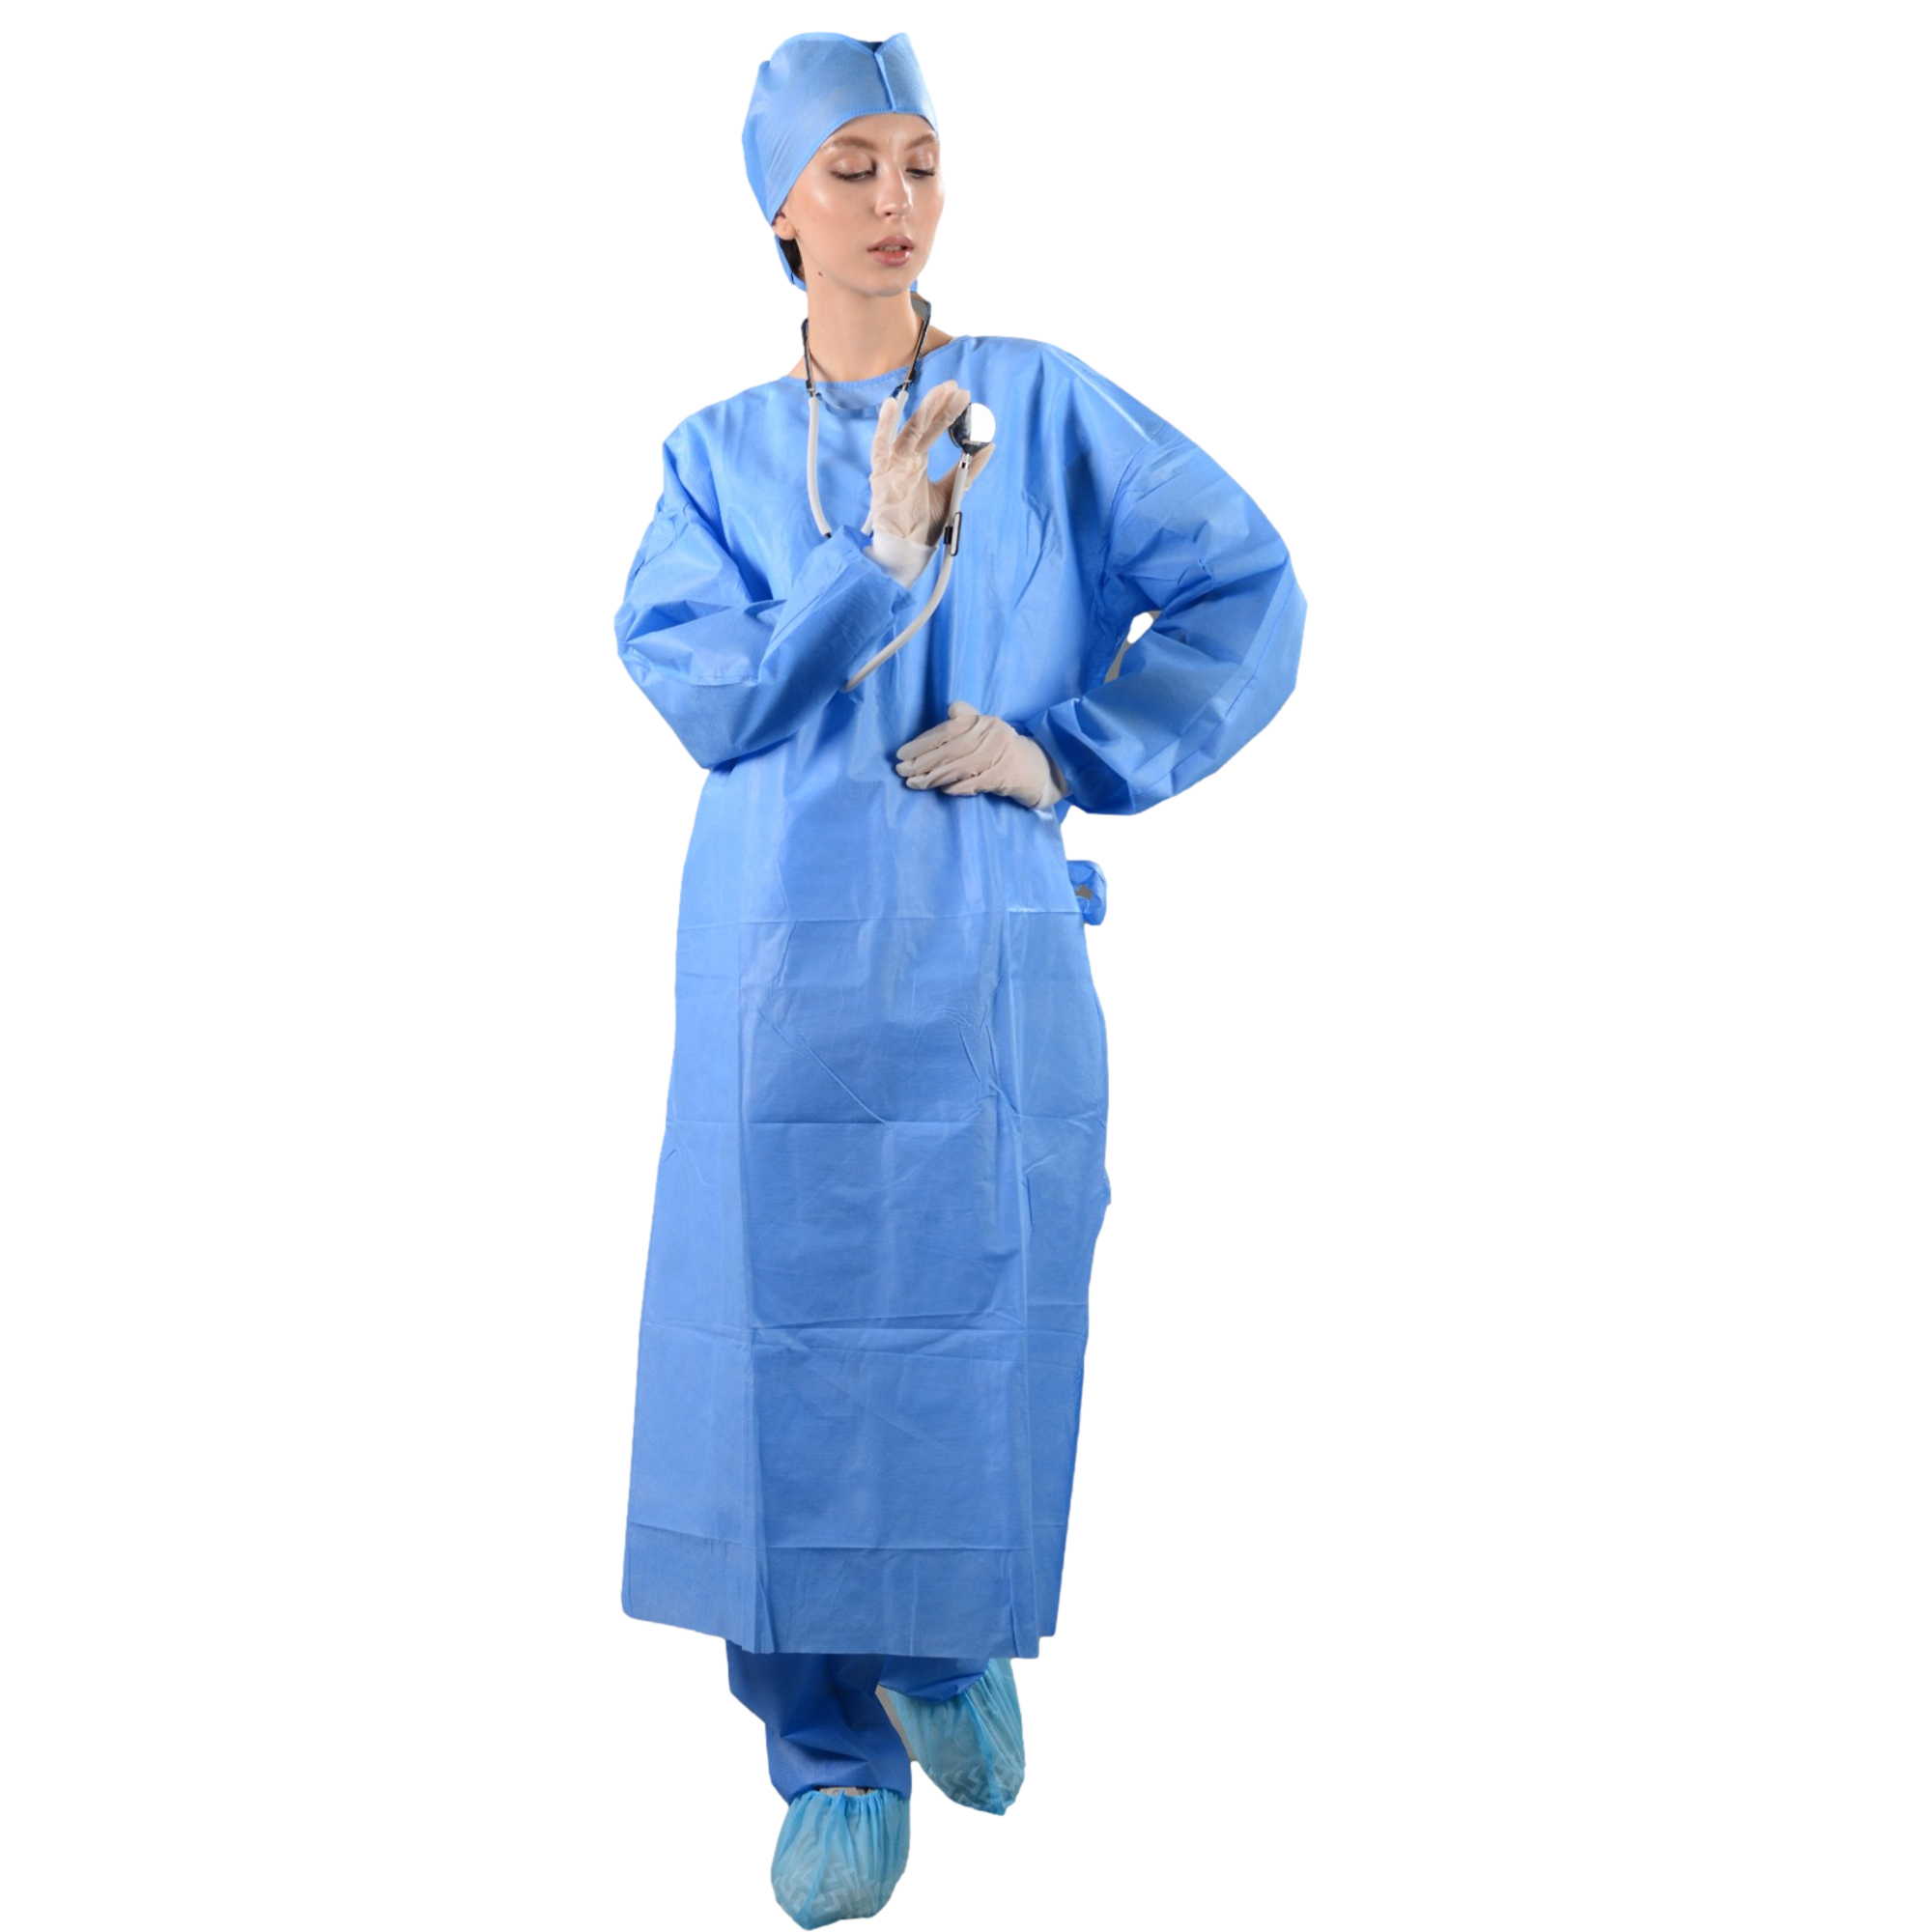 EN13795-1 European market SMMS standard surgical gowns